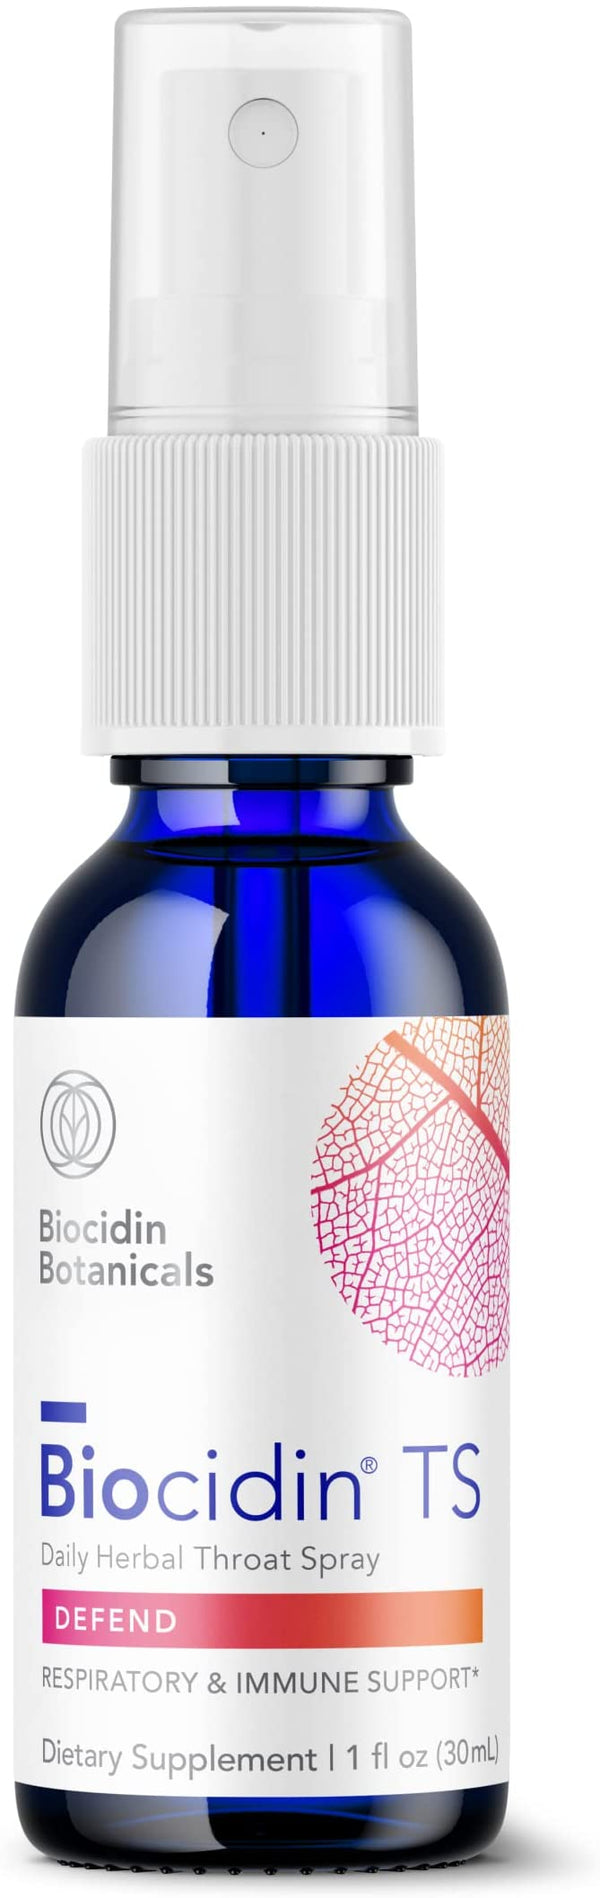 Biocidin Advanced Formula Throat Spray (Biocidin Botanicals) Front